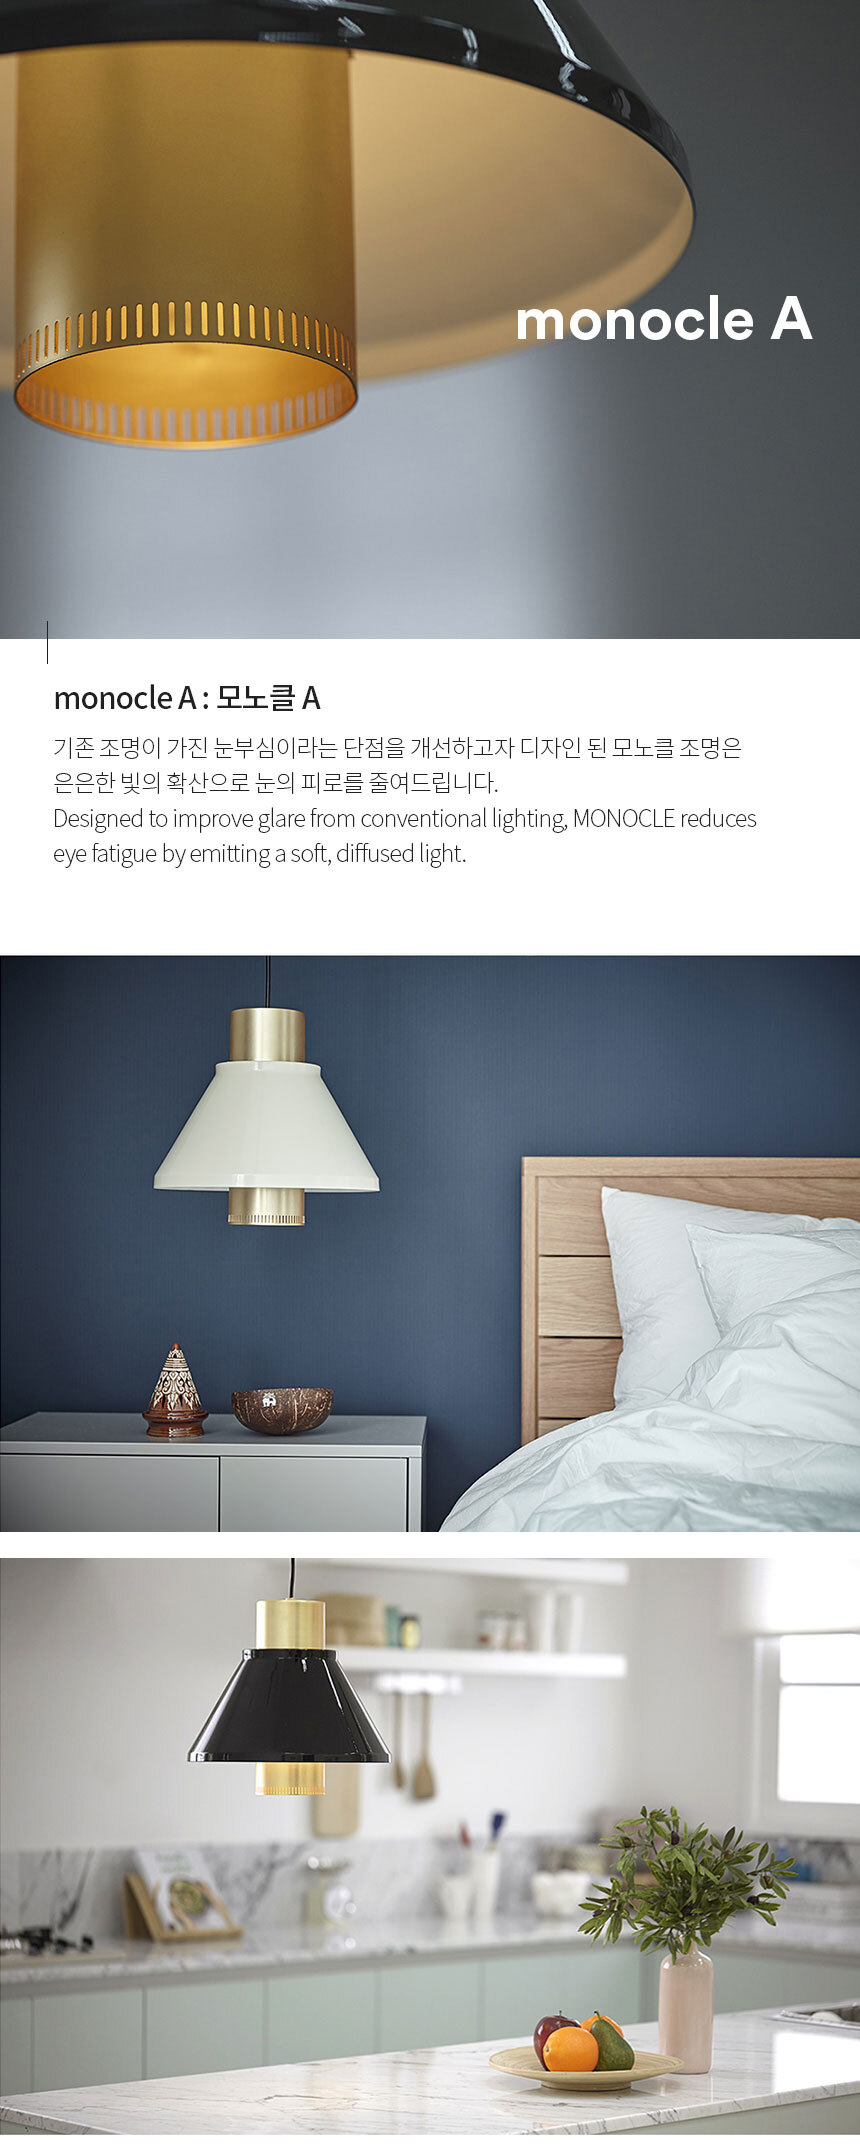 monocle A : 모노클 A 기존 조명이 가진 눈부심이라는 단점을 개선하고자 디자인 된 모노클 조명은 
은은한 빛의 확산으로 눈의 피로를 줄여드립니다.
Designed to improve glare from conventional lighting, MONOCLE reduces 
eye fatigue by emitting a soft, diffused light.